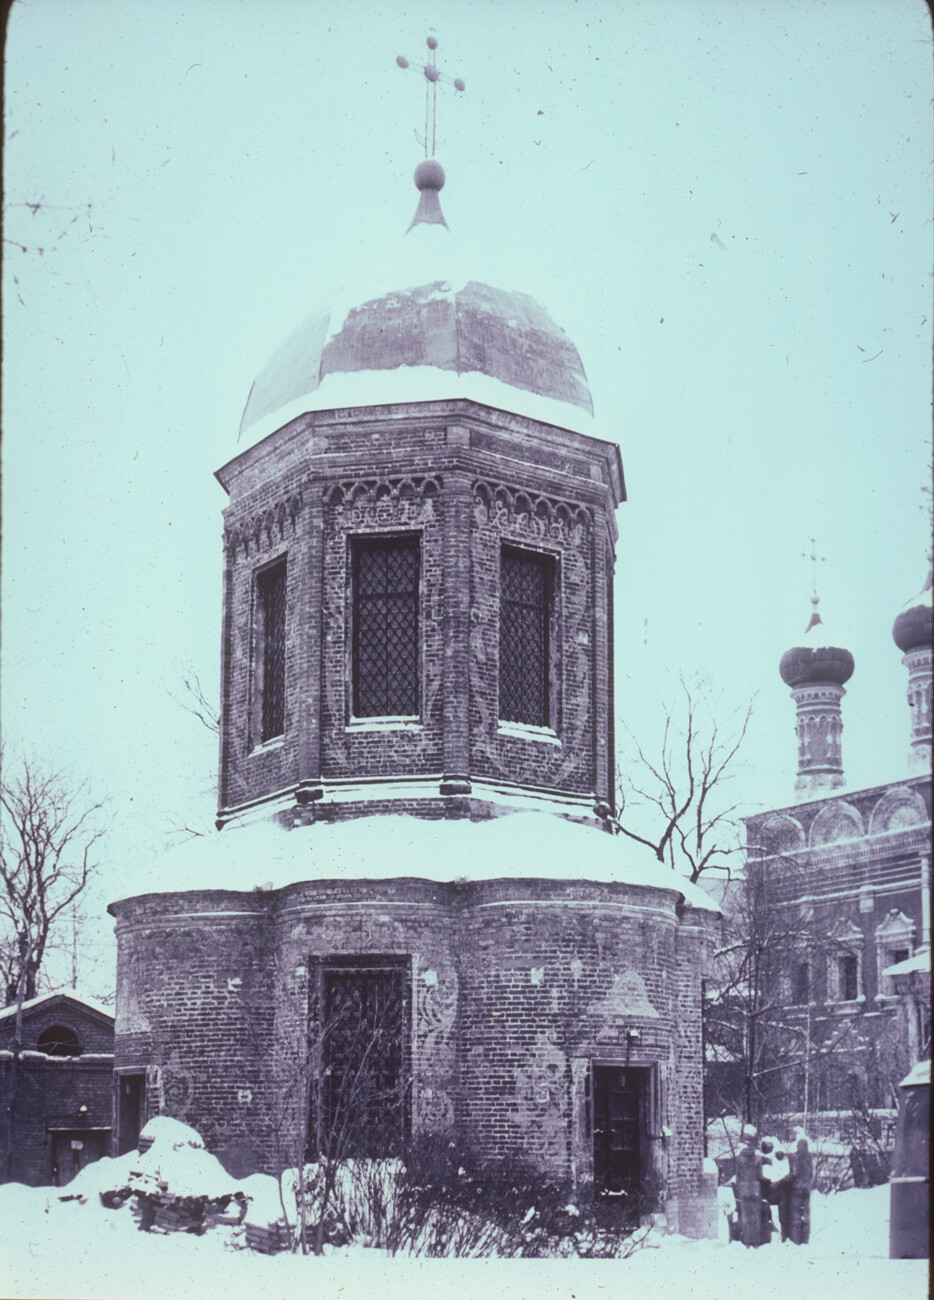 Upper Petrovsky Monastery. Cathedral of Metropolitan Peter, northwest view before restoration. Photo: December 16, 1979